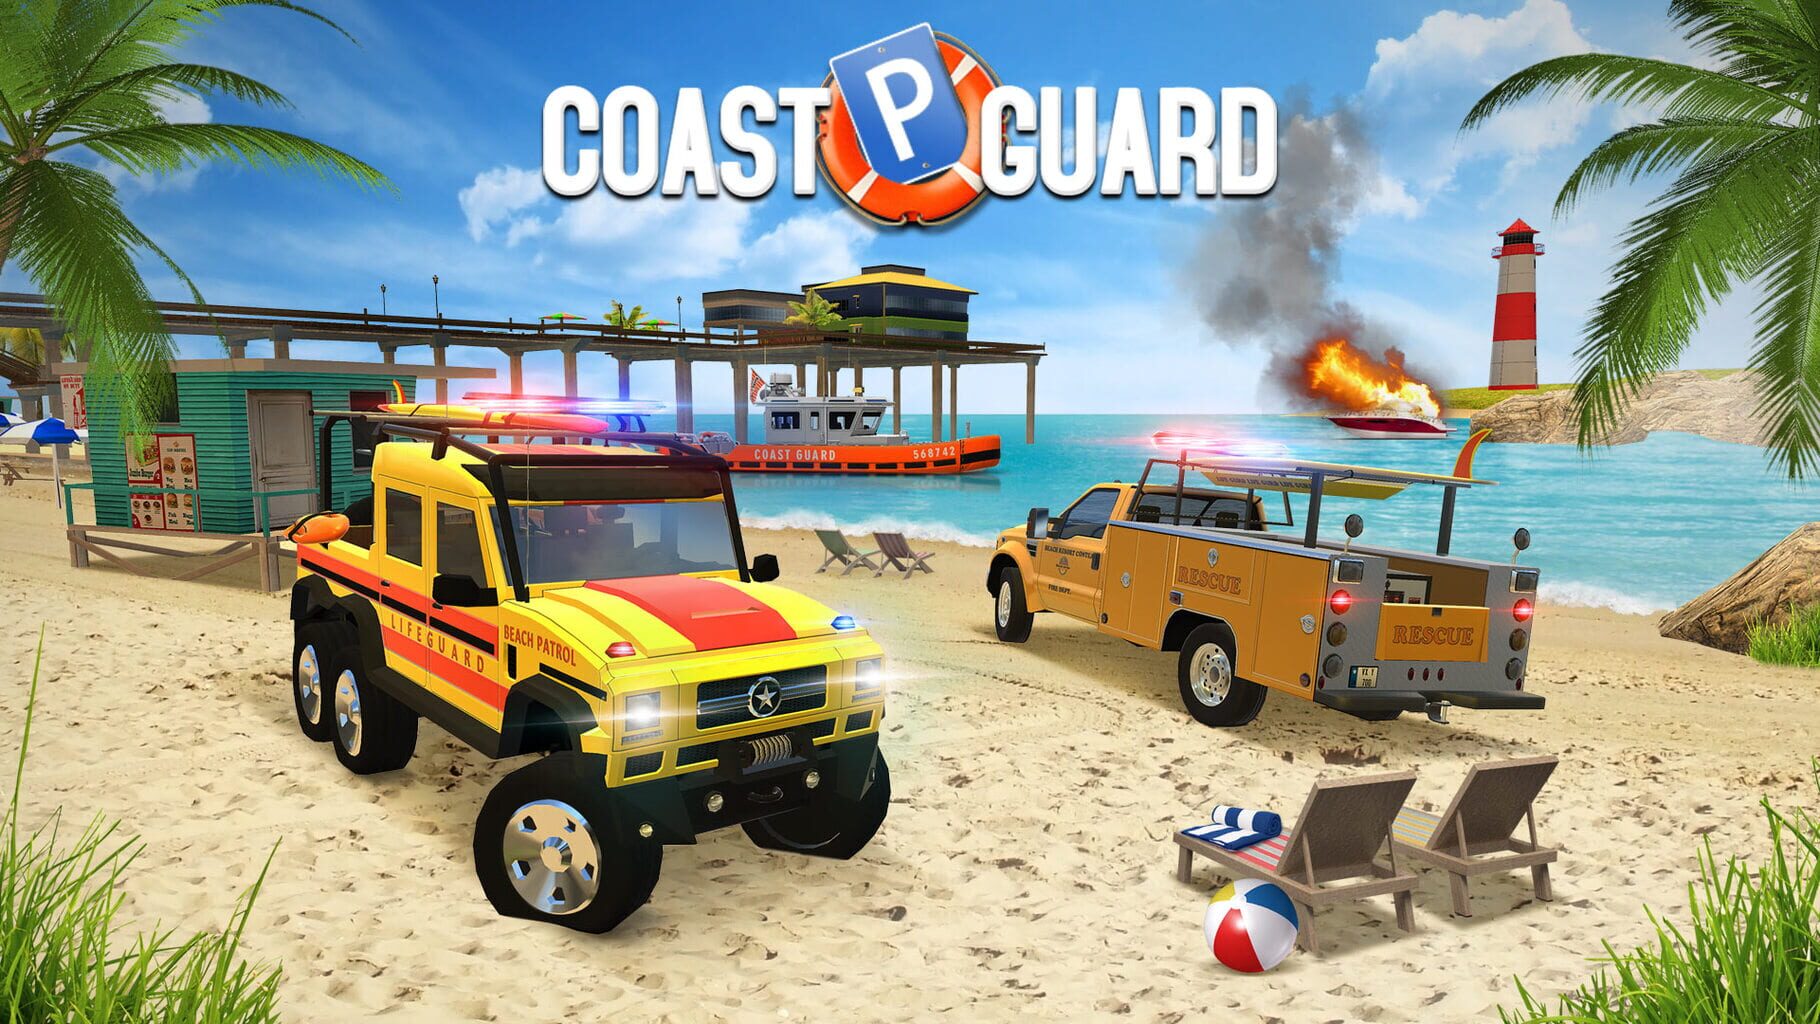 Coast Guard: Beach Rescue Team artwork